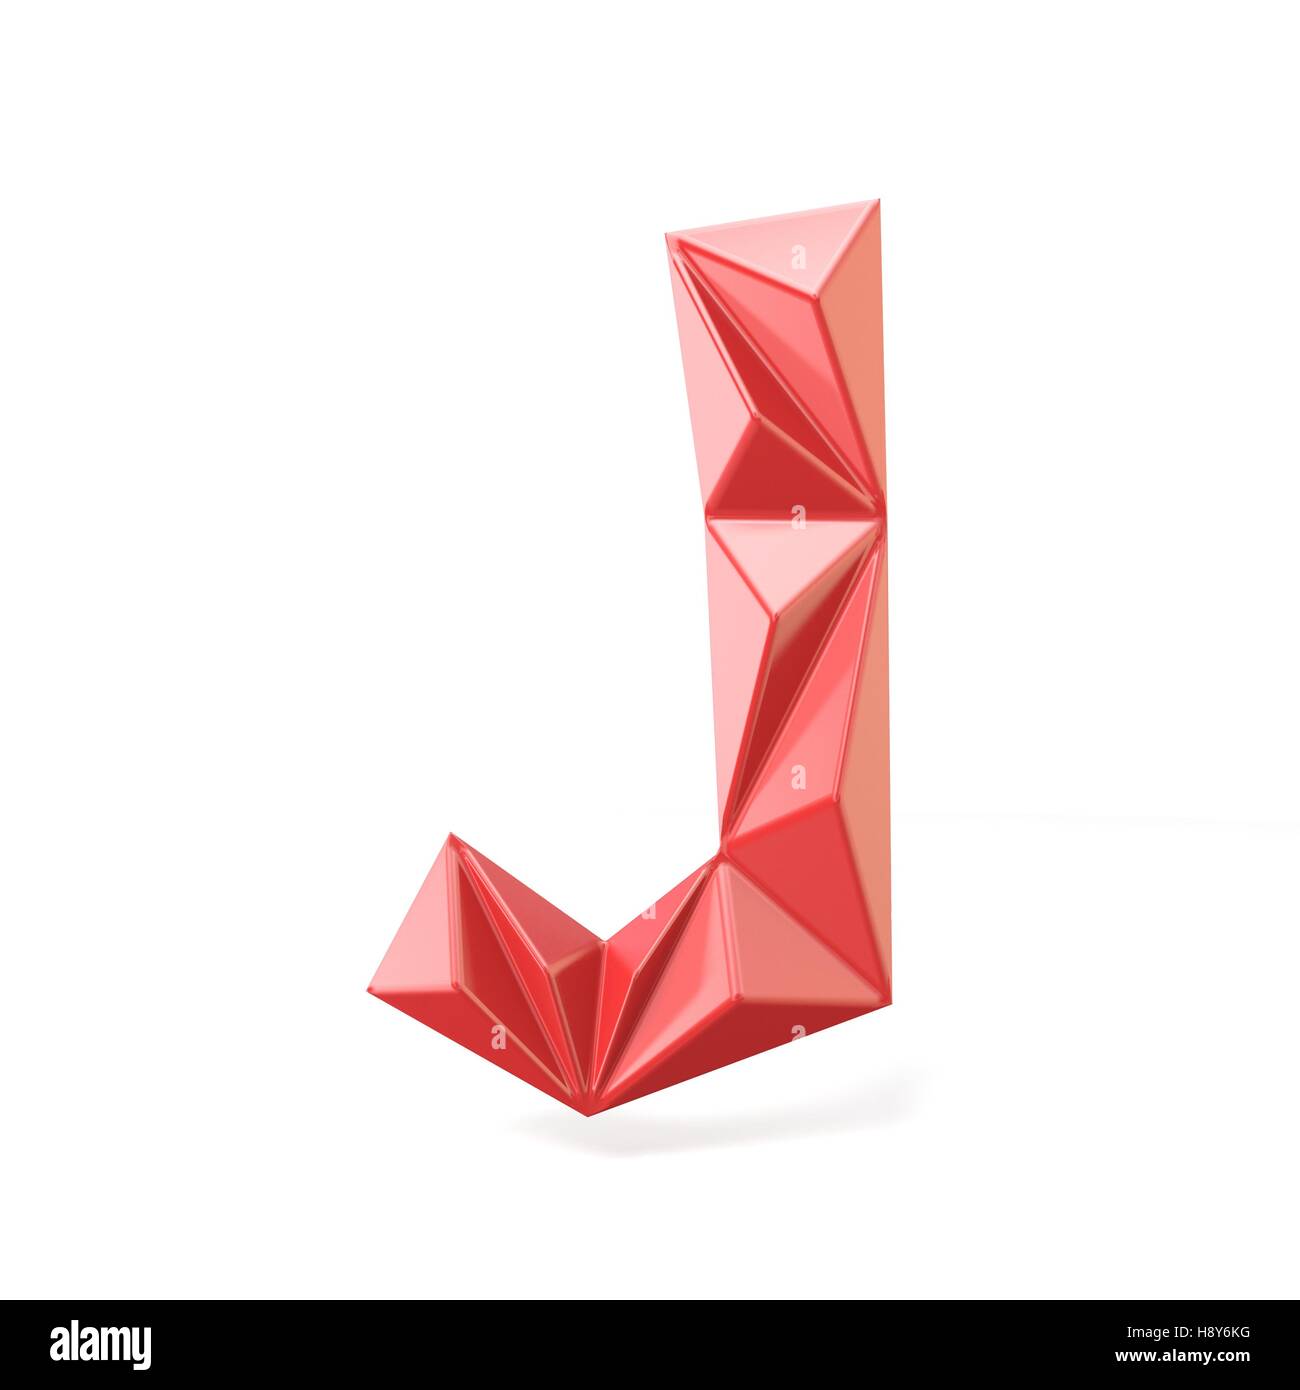 Red modern triangular font letter J. 3D render illustration isolated on white background Stock Photo